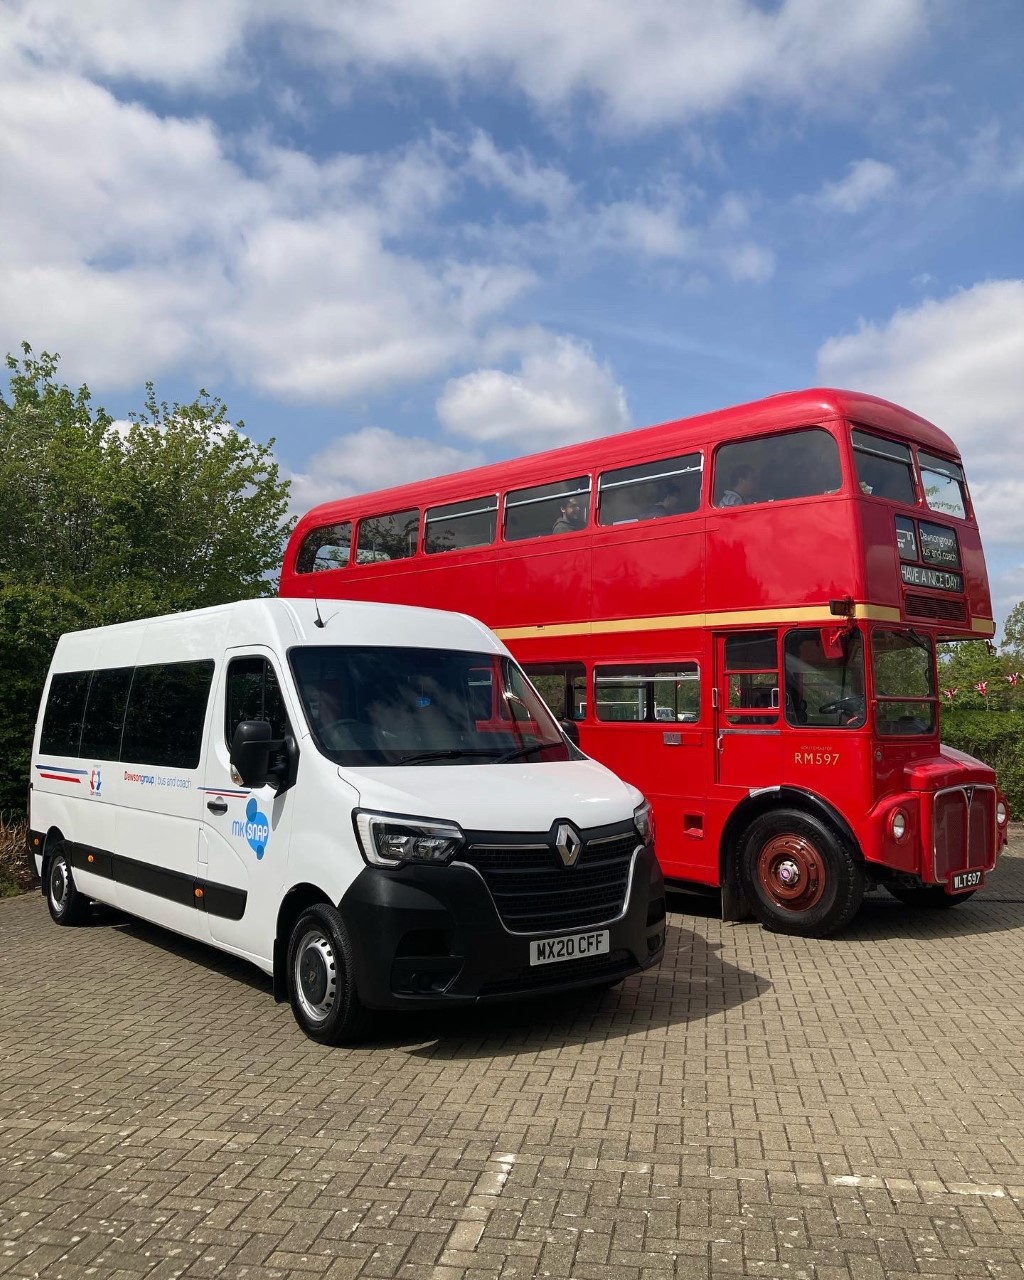 New MK SNAP Minibus thanks to Dawson Group Ltd